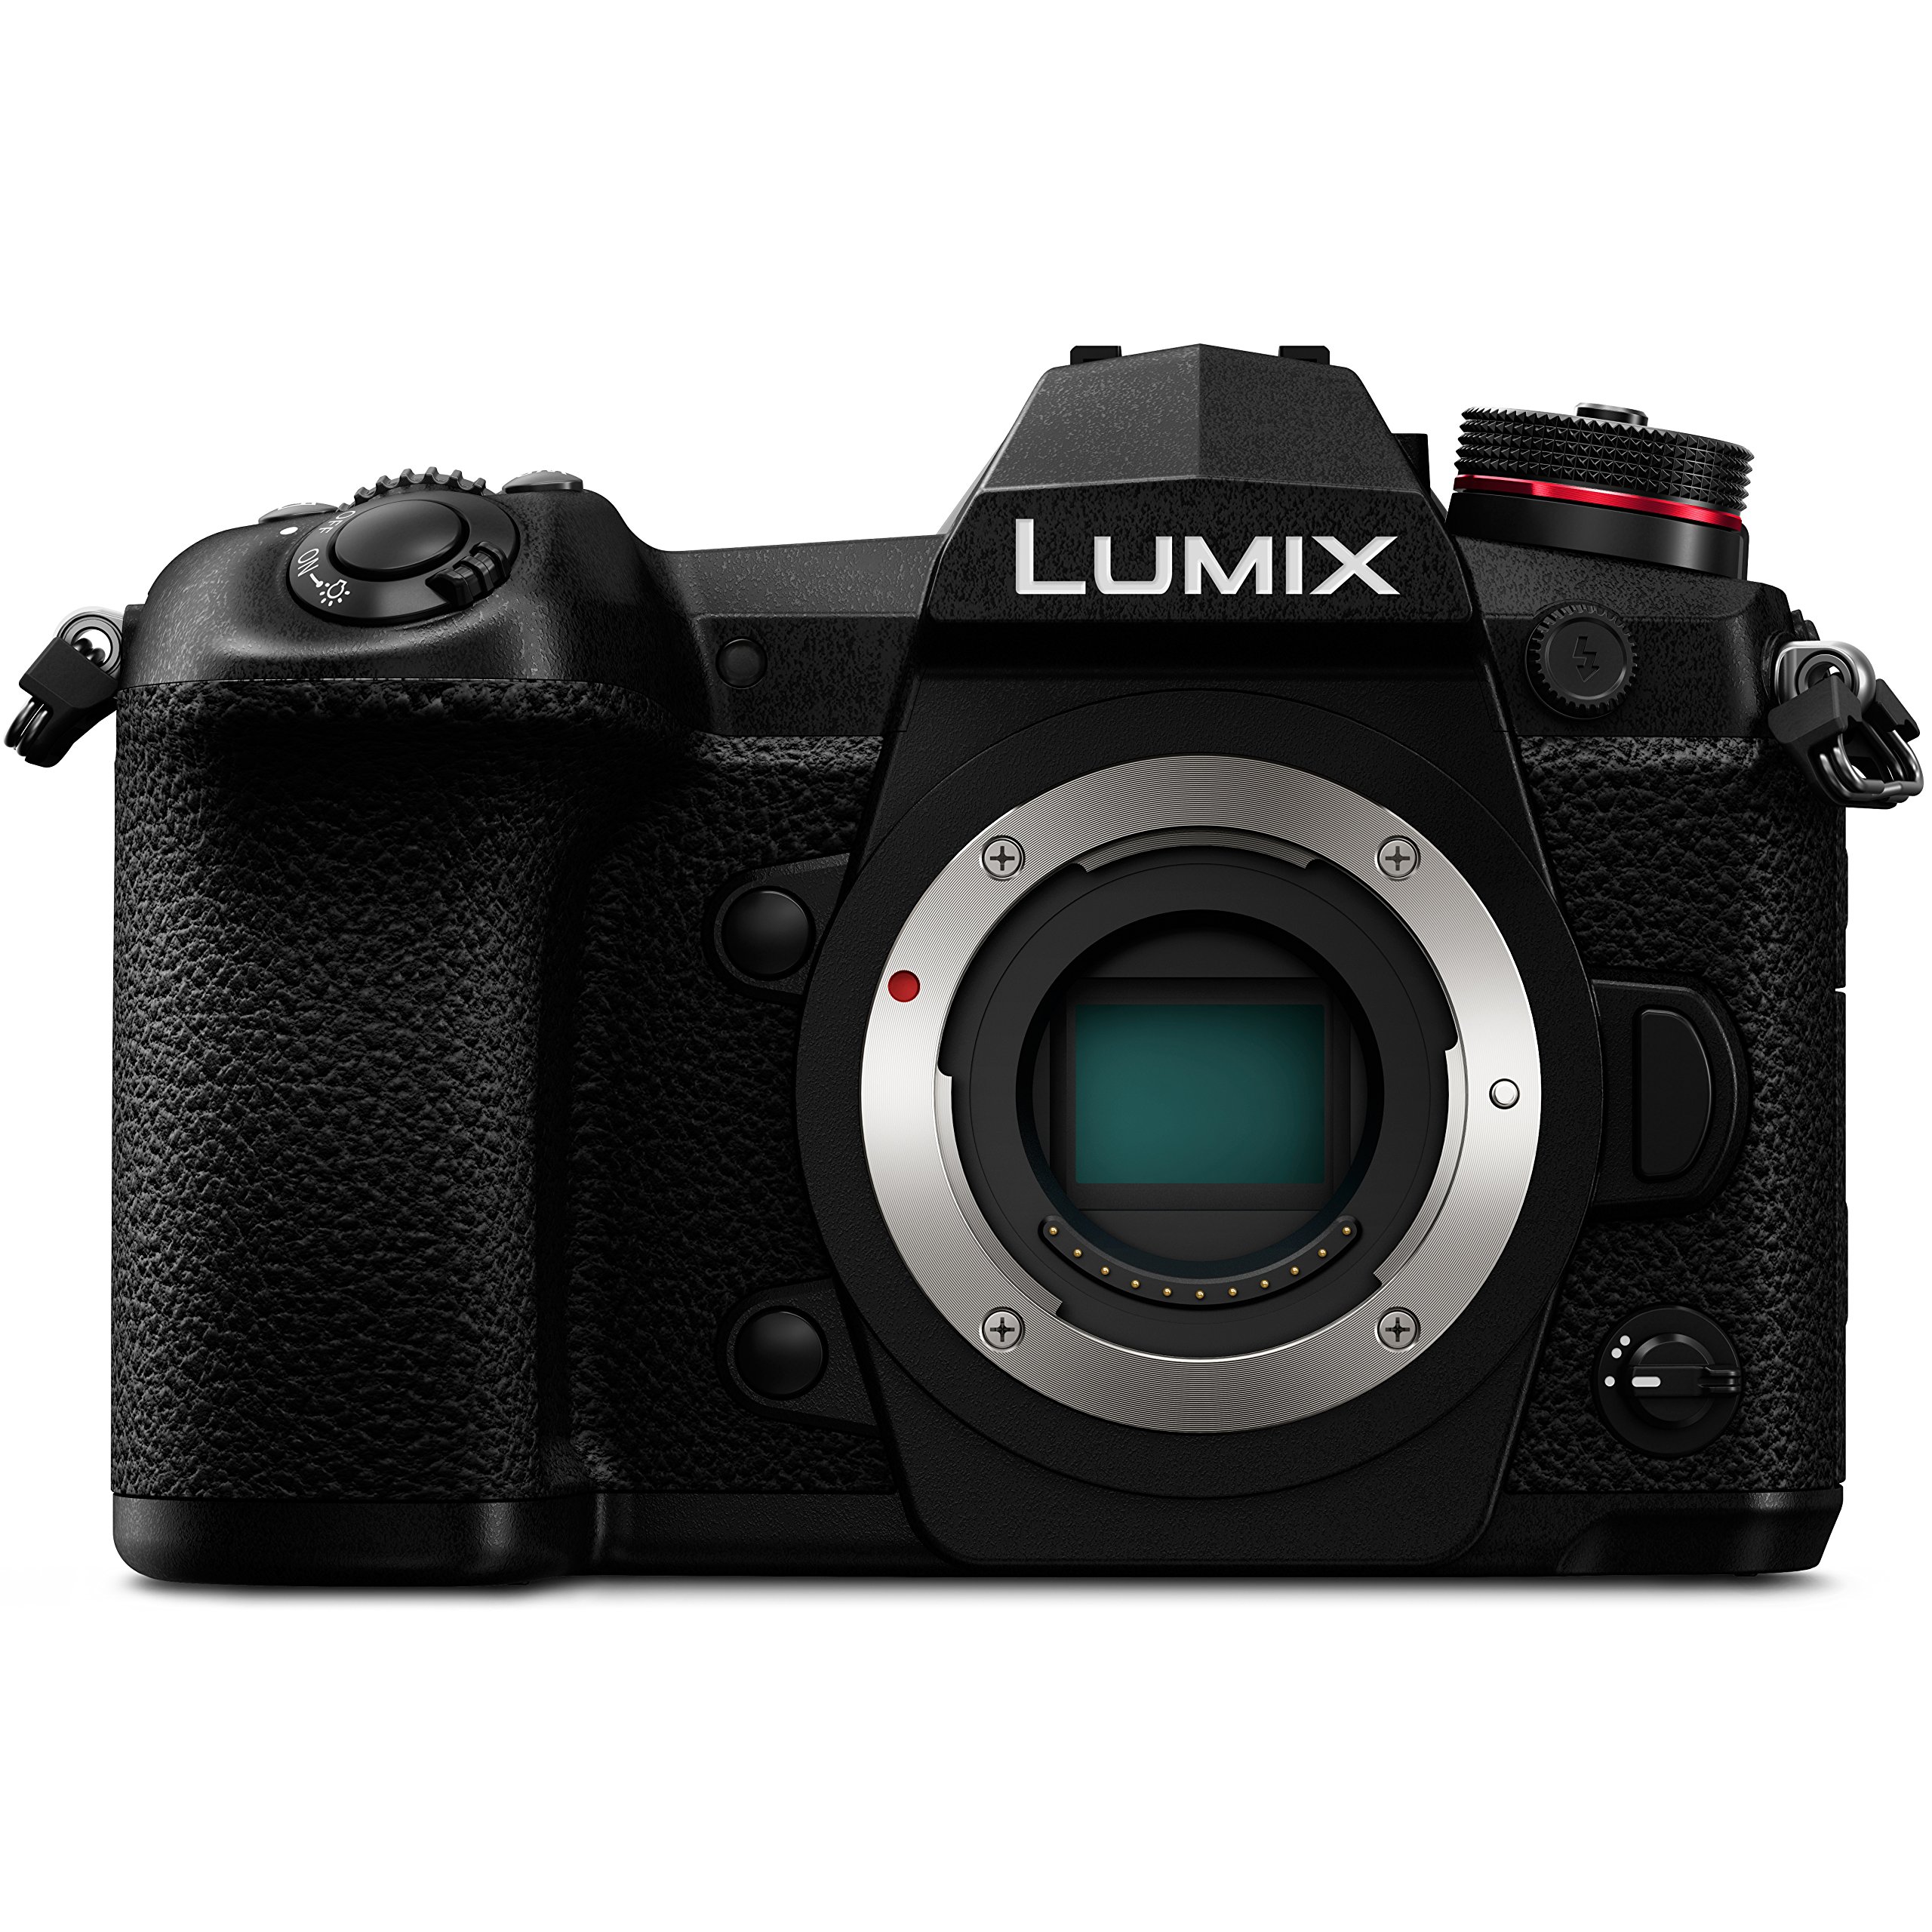 Panasonic LUMIX G9 4K Digital Camera, 20.3 Megapixel Mirrorless Camera Plus 80 Megapixel High-Resolution Mode